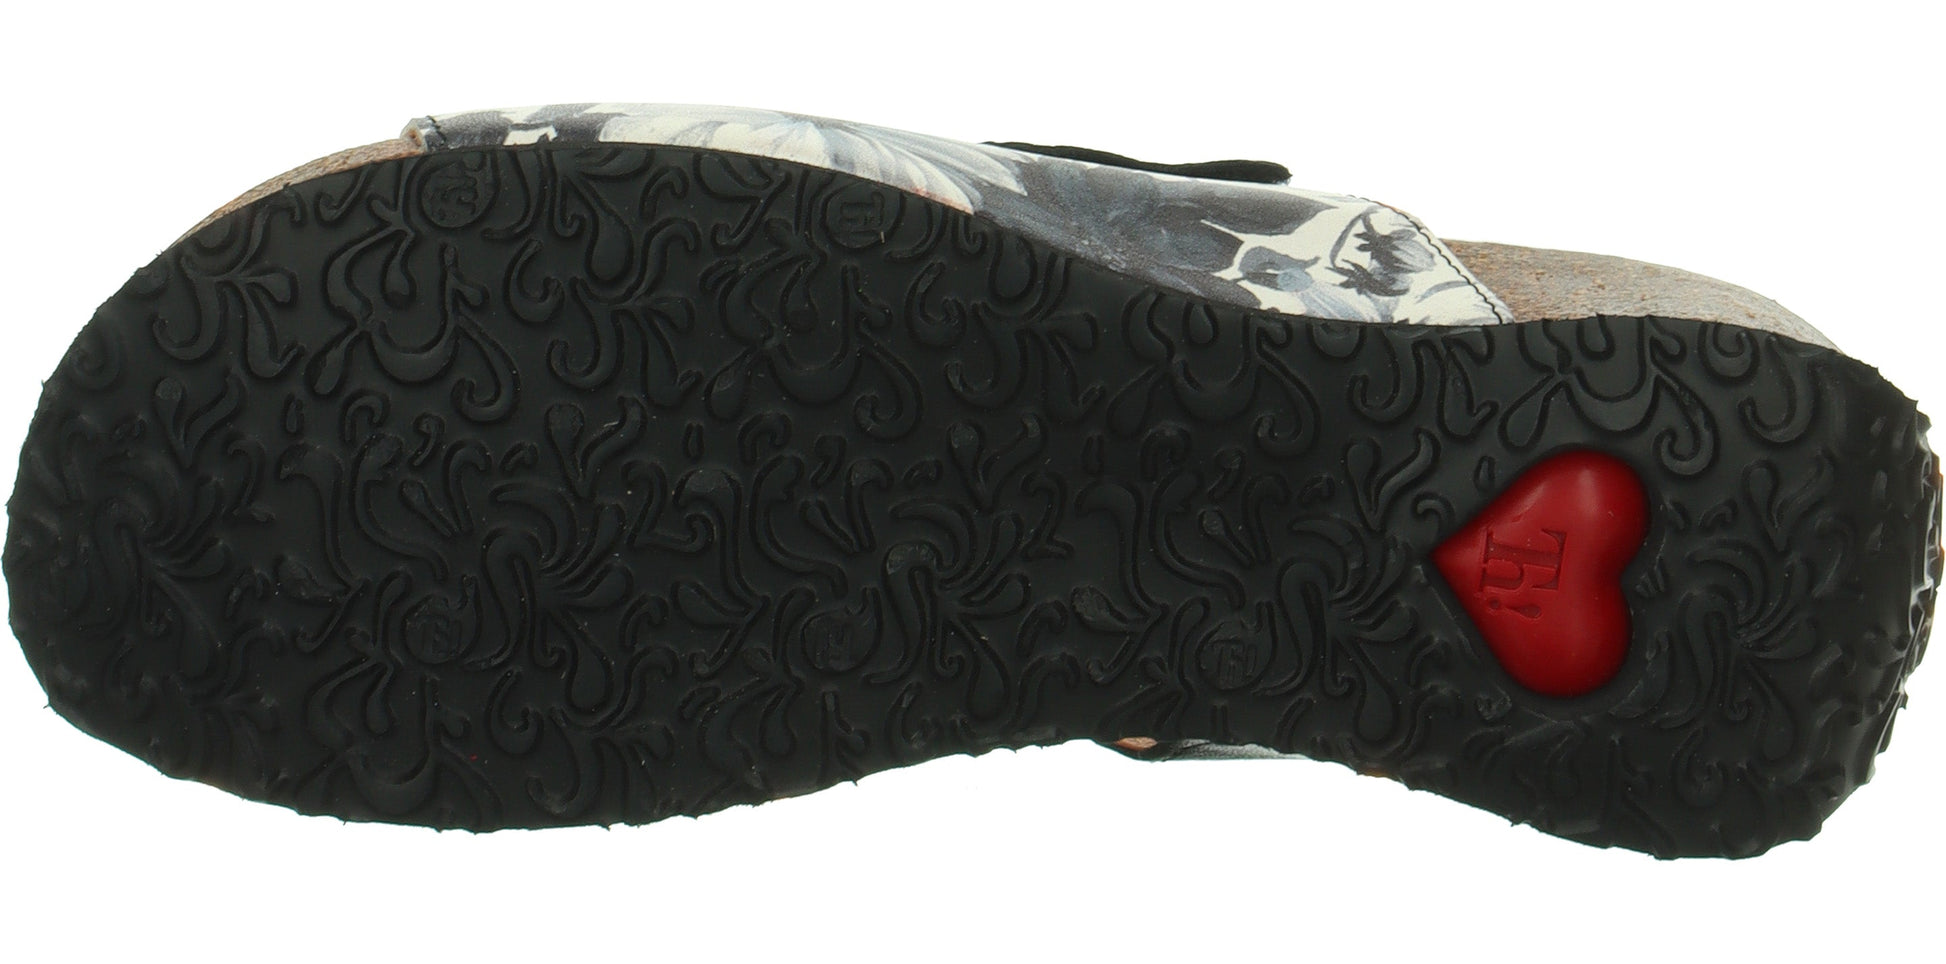 Think Shoes USA MIZZI Sandals Black 000124-9030GK